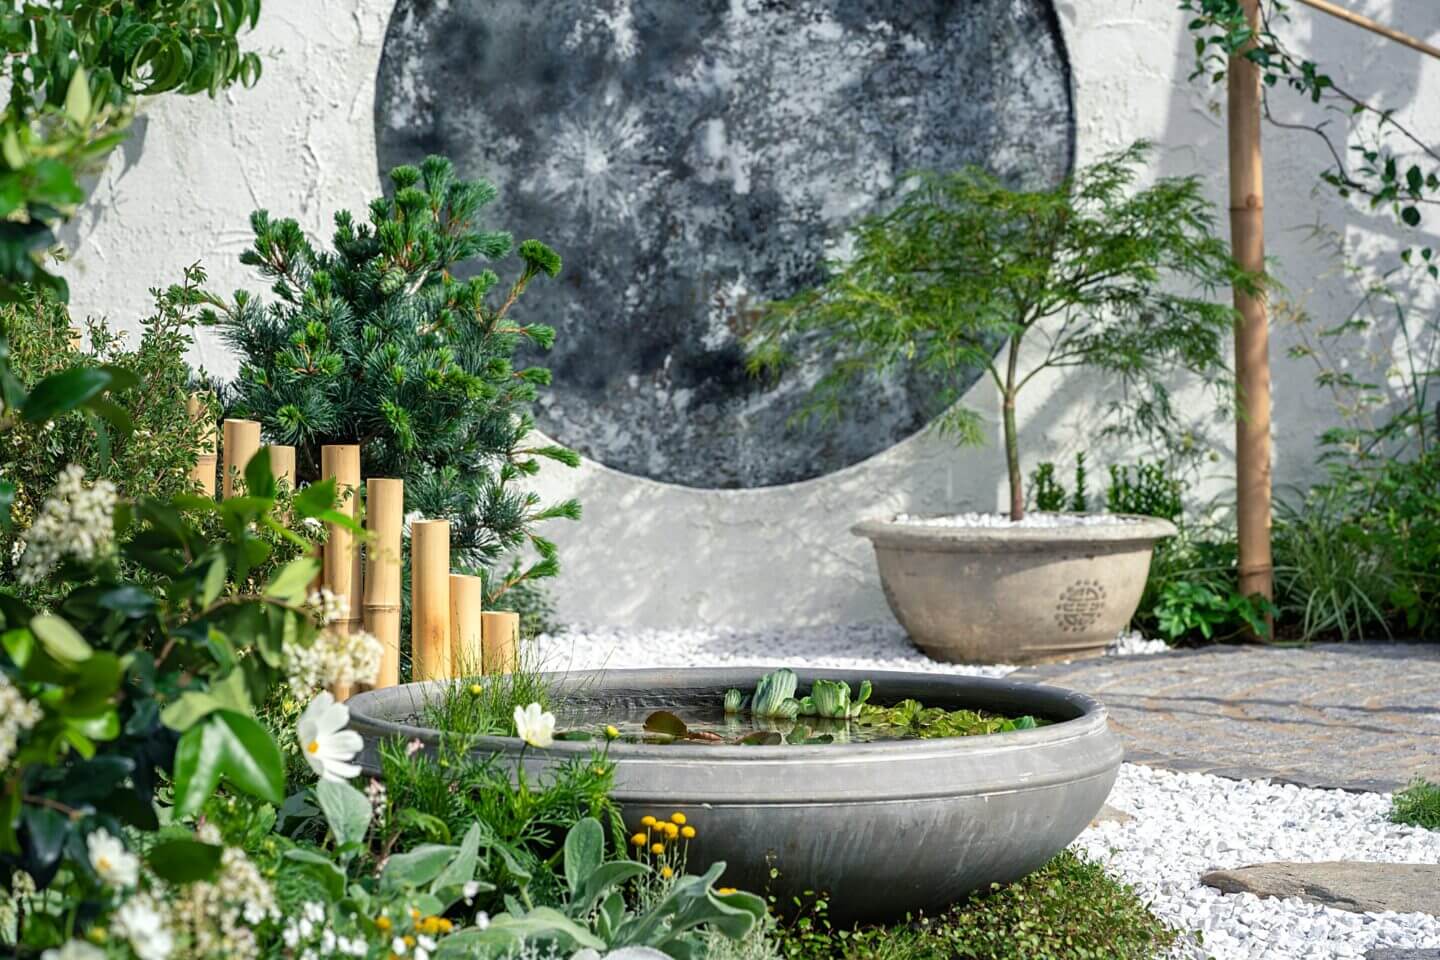 The Lunar Garden water pot and bamboo poles